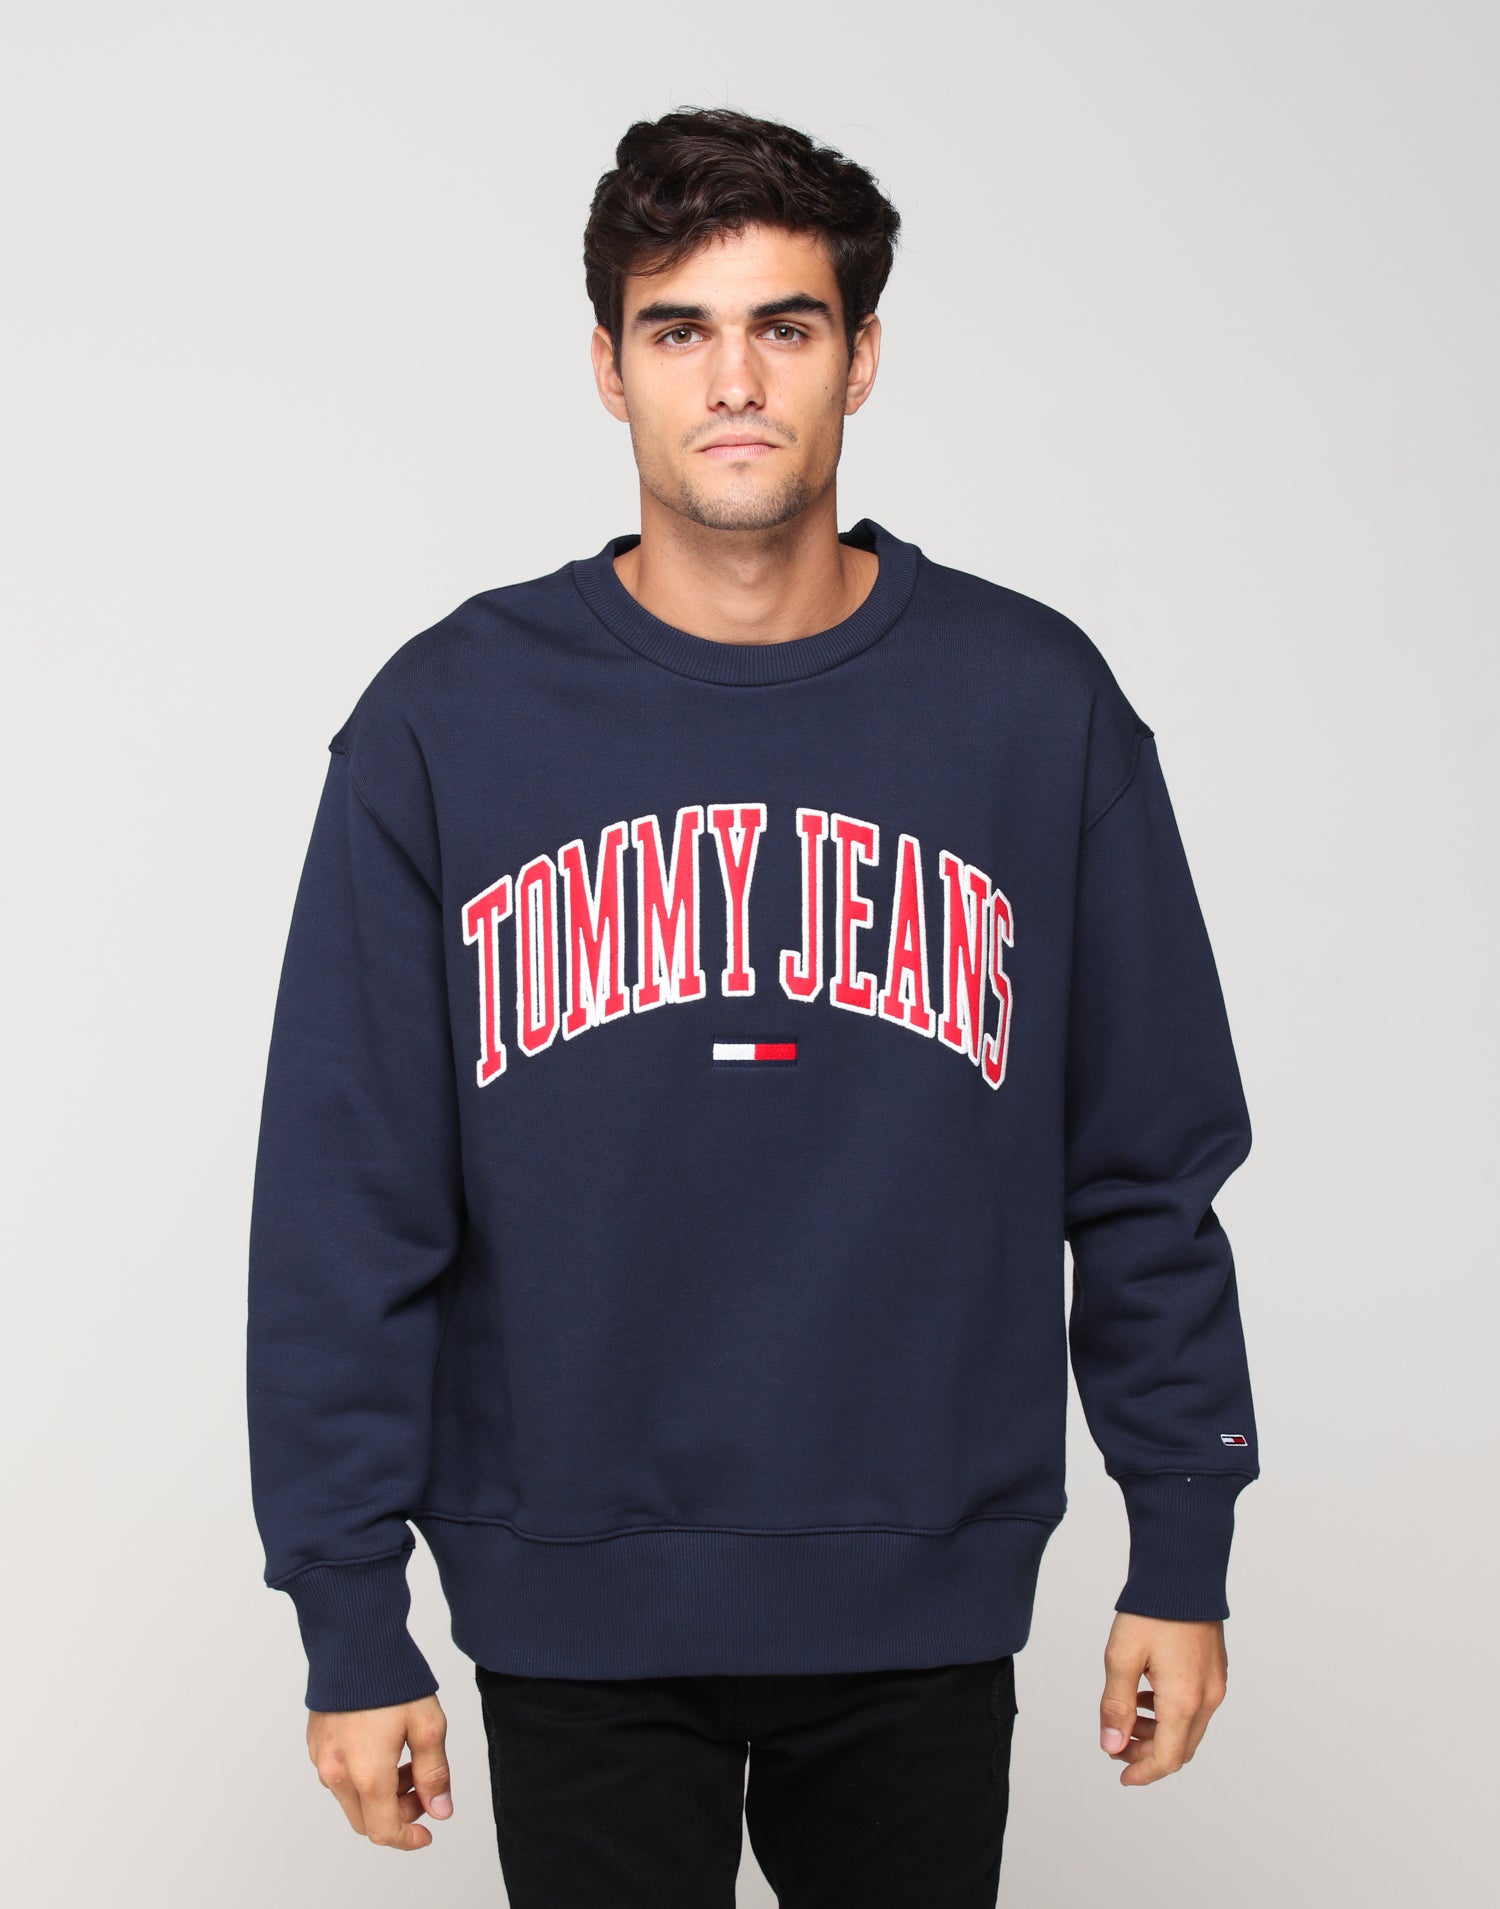 collegiate crew sweatshirt by tommy jeans